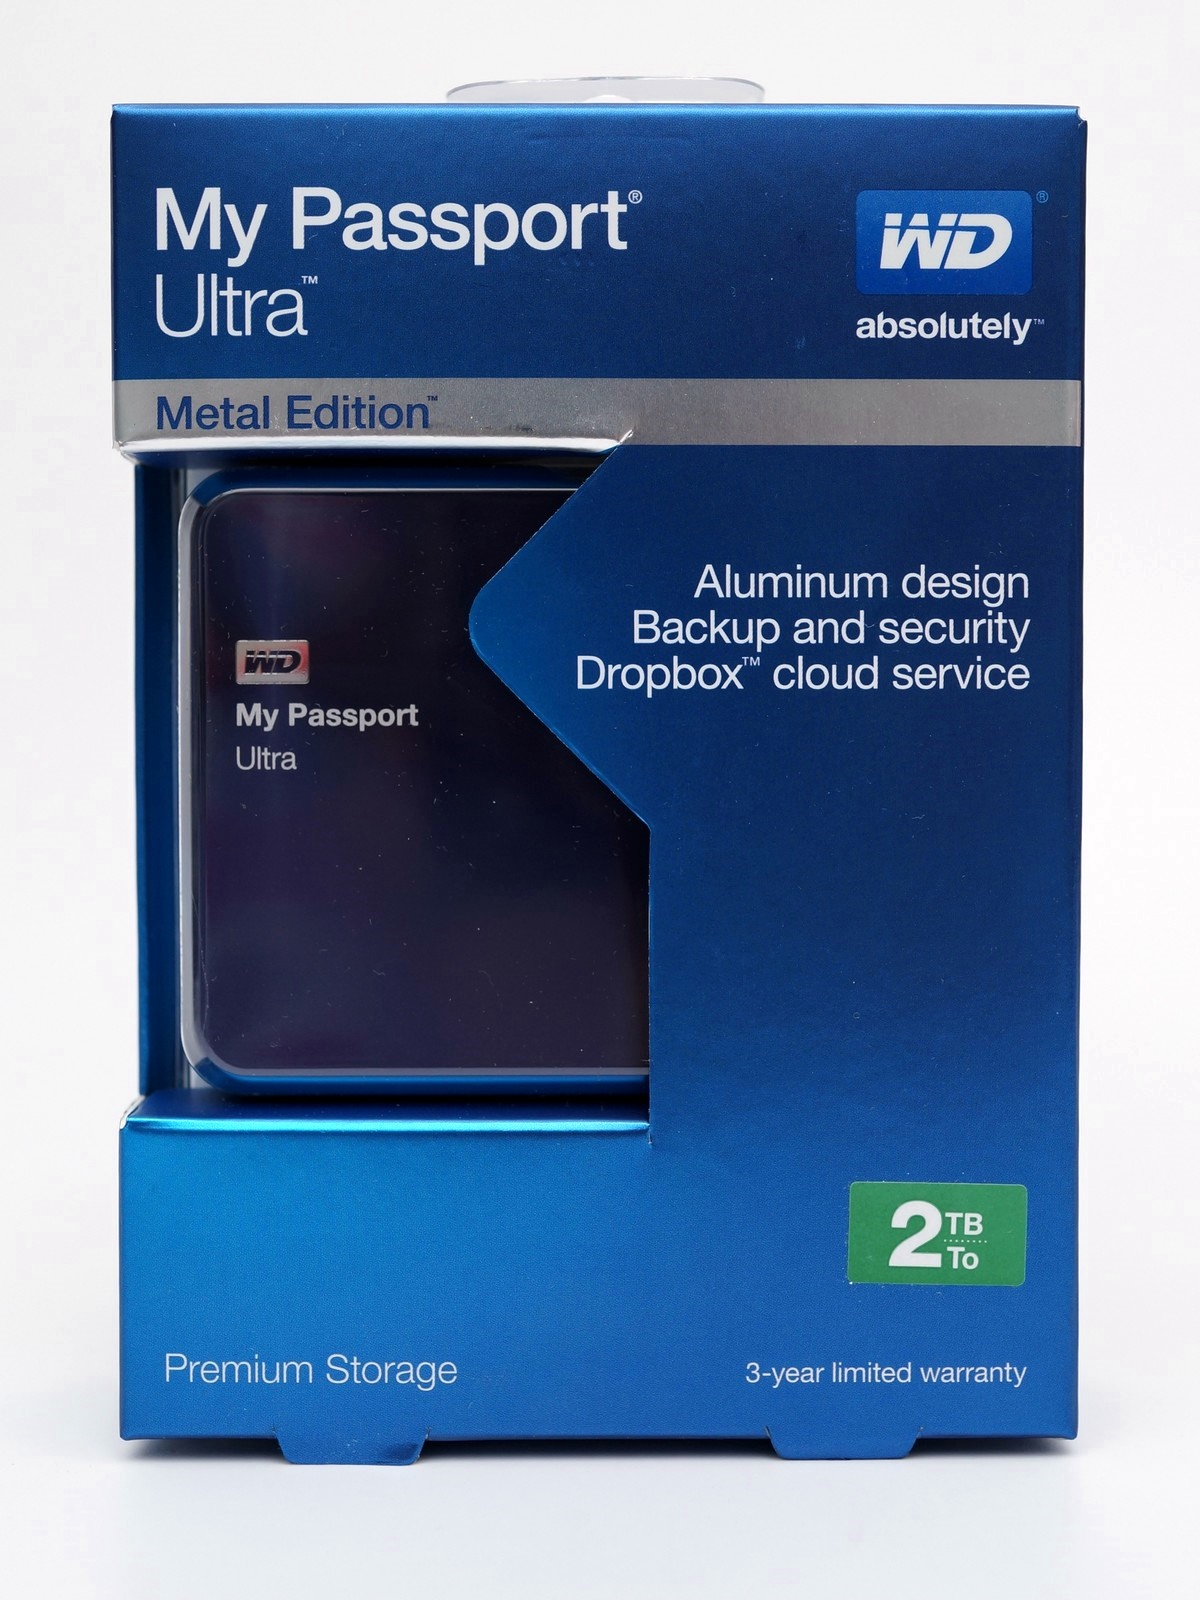 [XF] 金屬質感高容量 資料備份不費心WD My Passport Ultra Metal Edition 2TB 評測